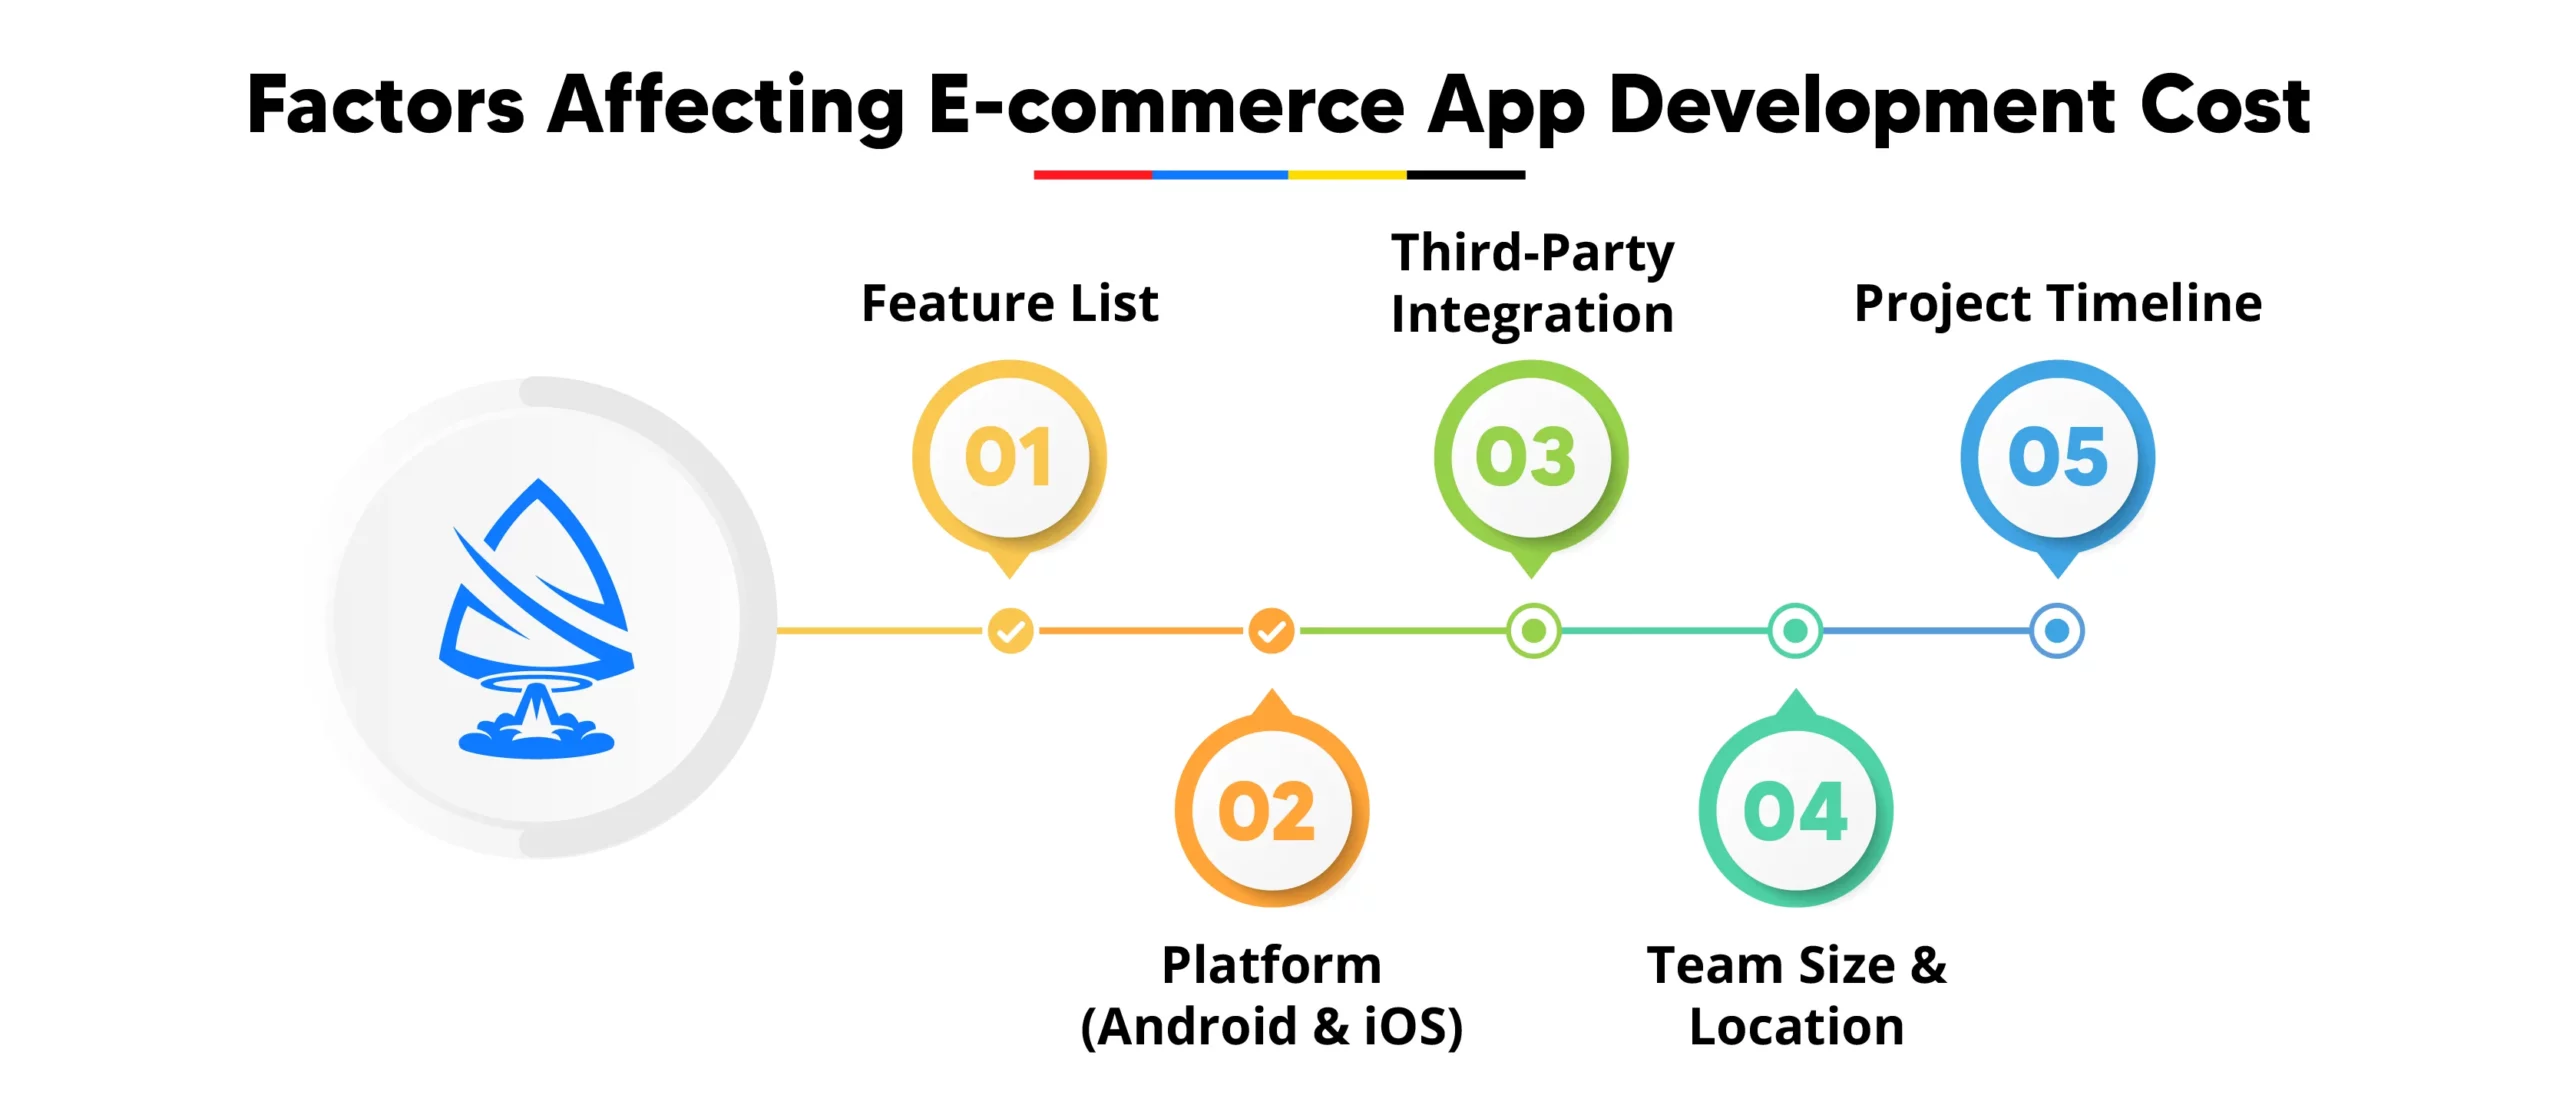 Factors Affecting E-commerce App Development Cost